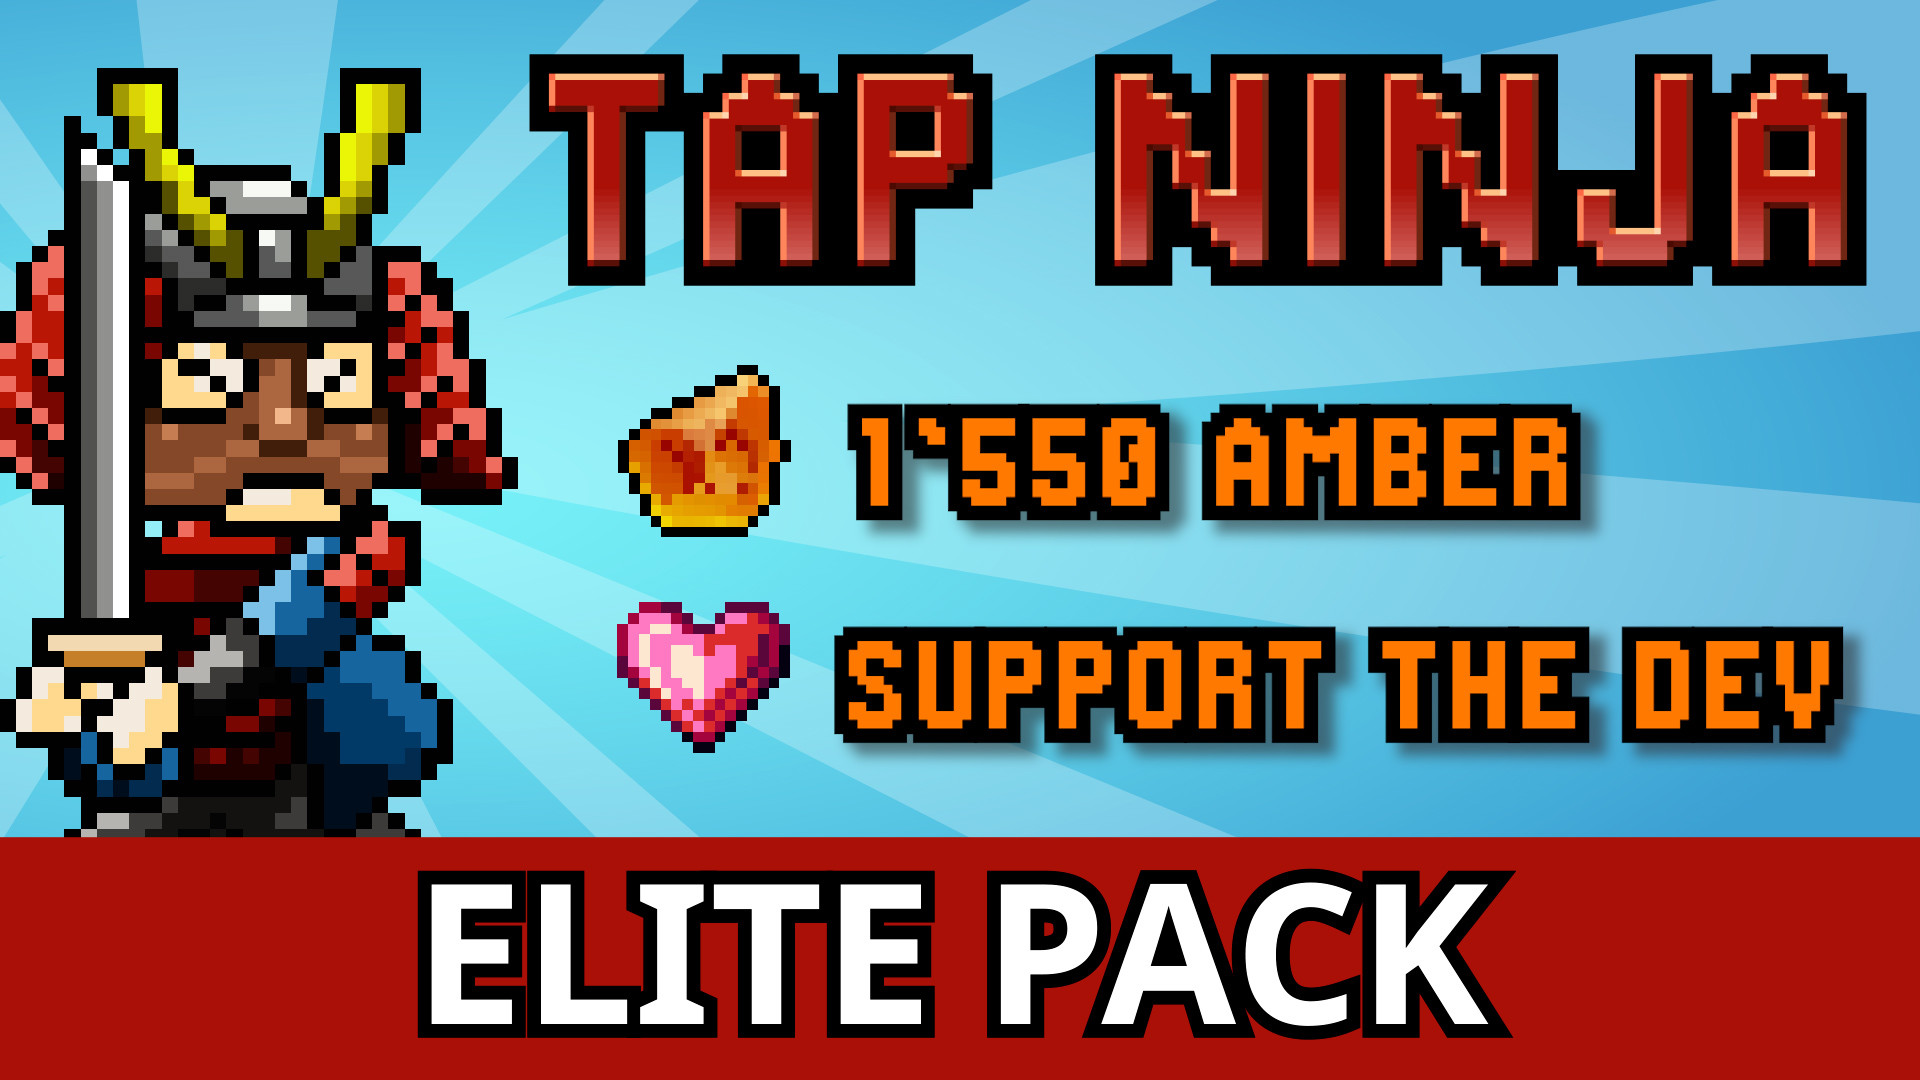 Tap Ninja - Supporter Pack DLC Steam CD Key 4.51 usd